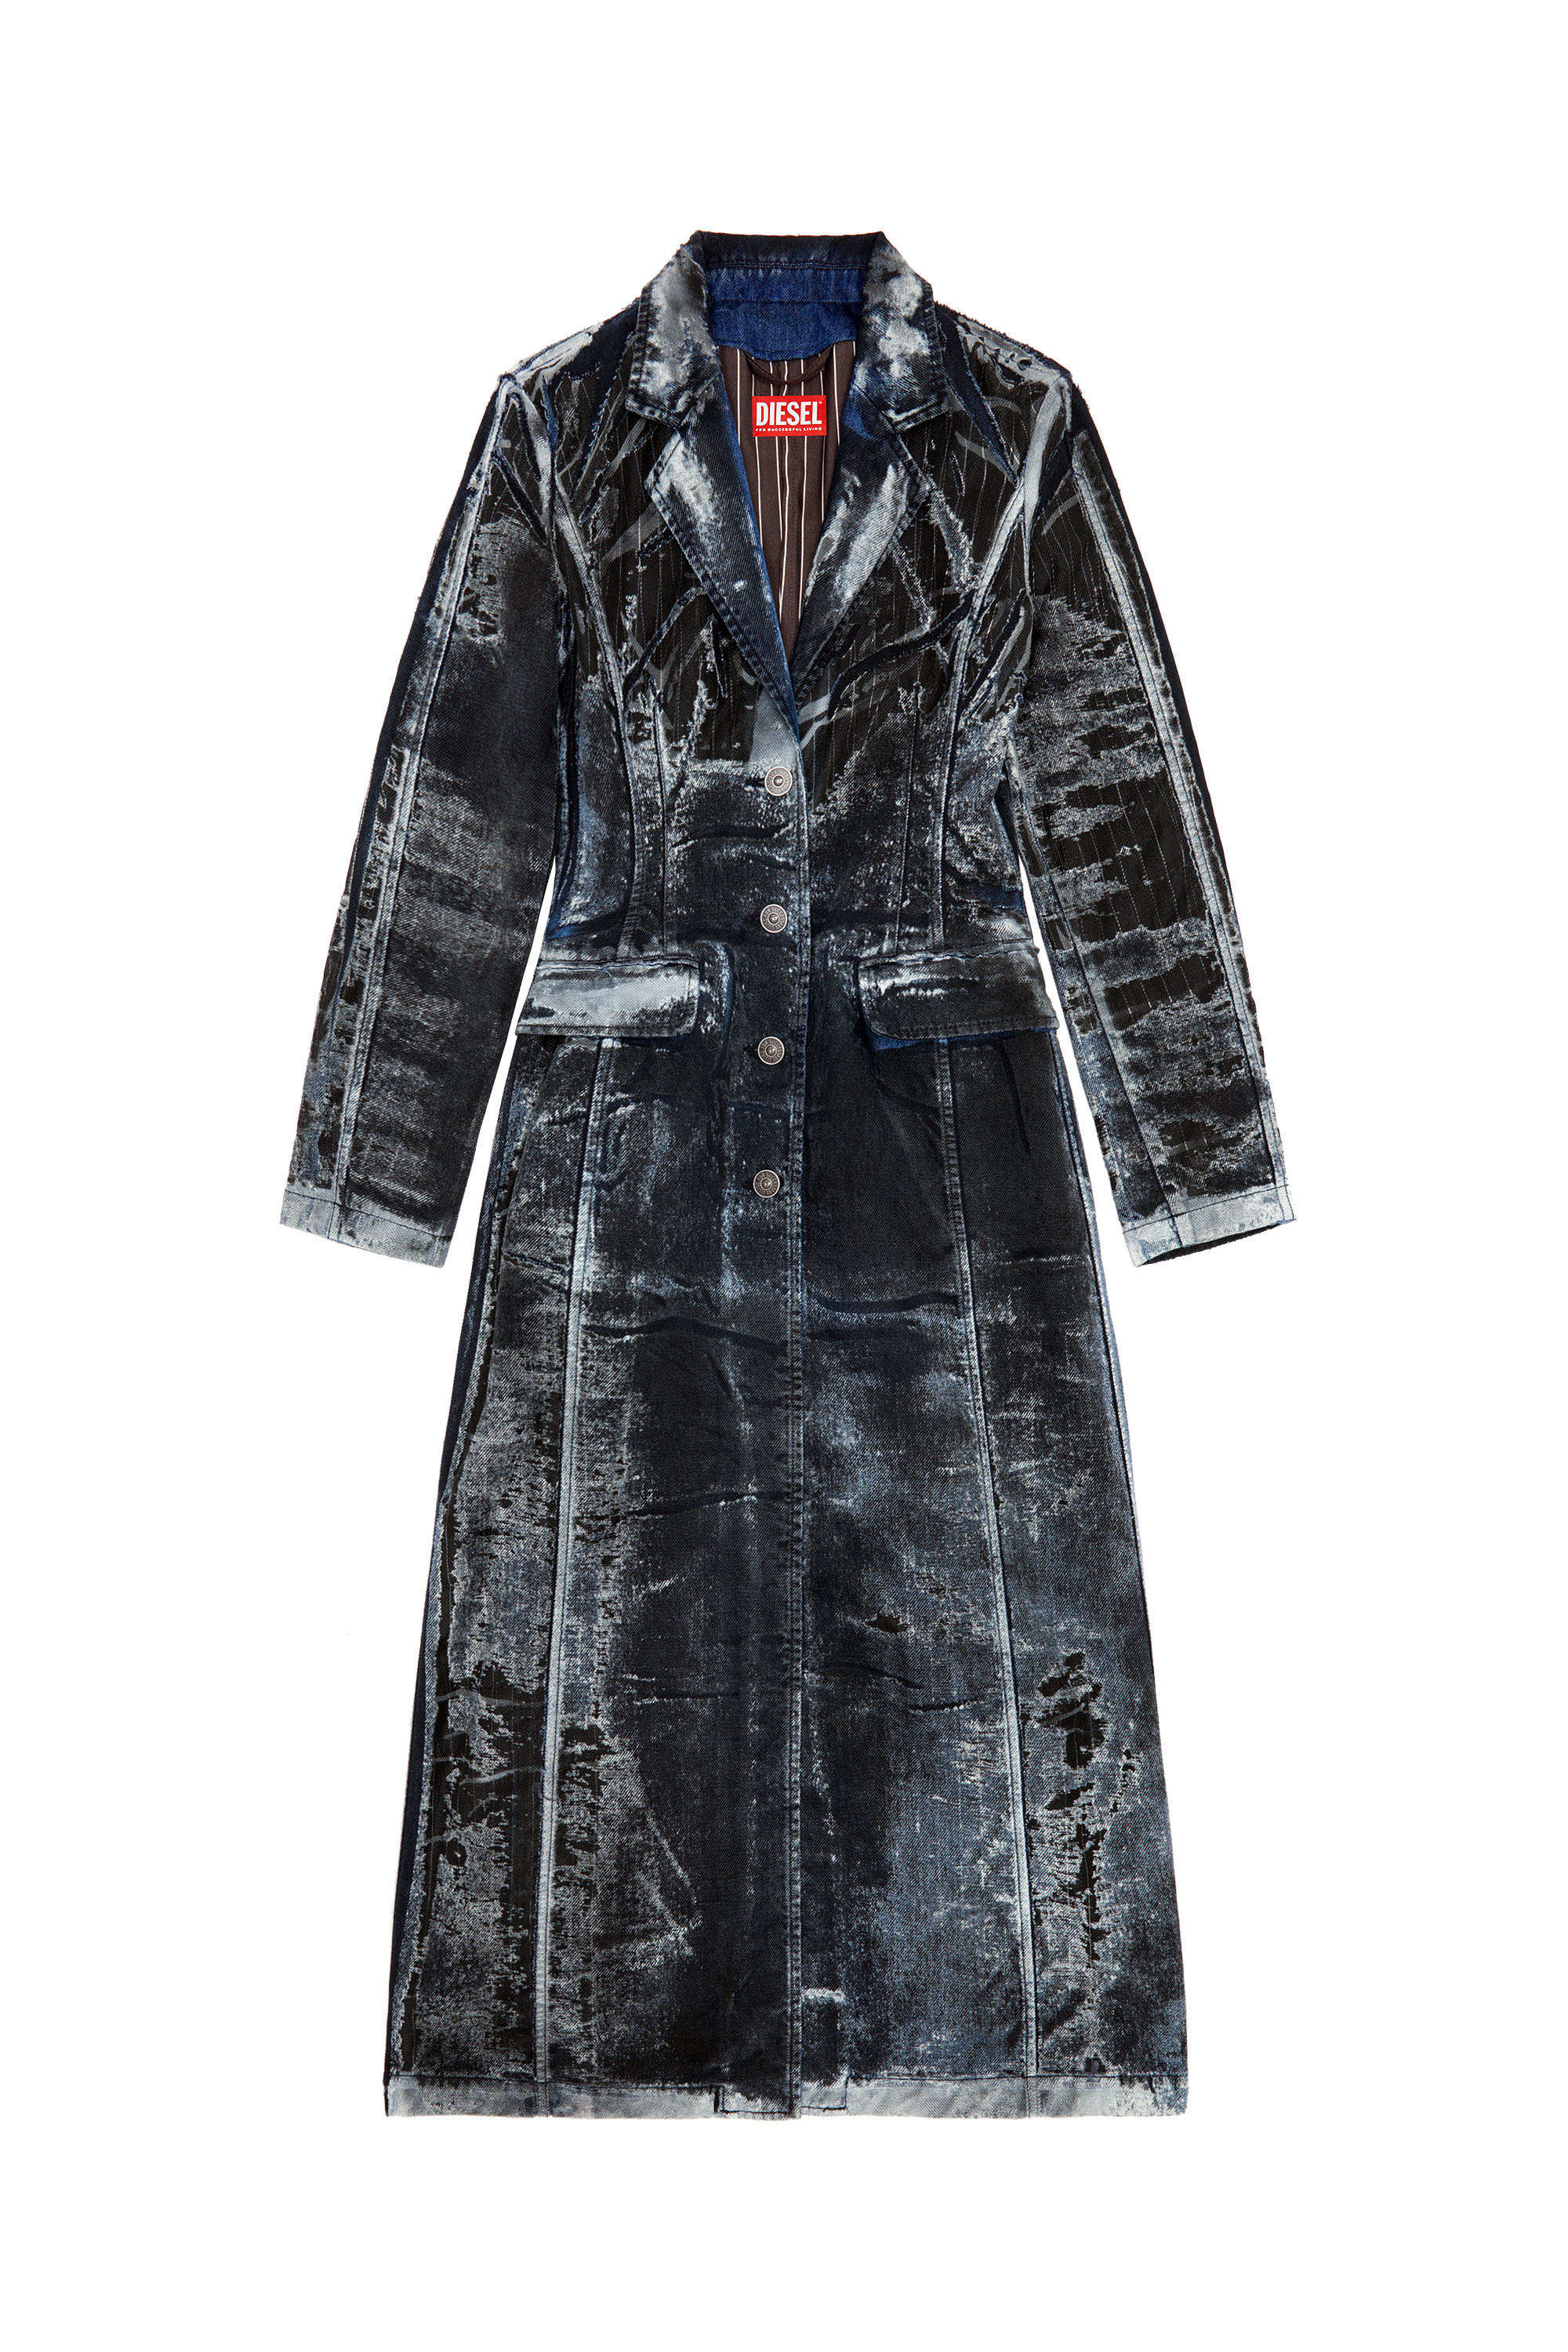 Diesel - DE-PIA-FSE, Woman Coat in pinstriped devoré denim in Multicolor - Image 5